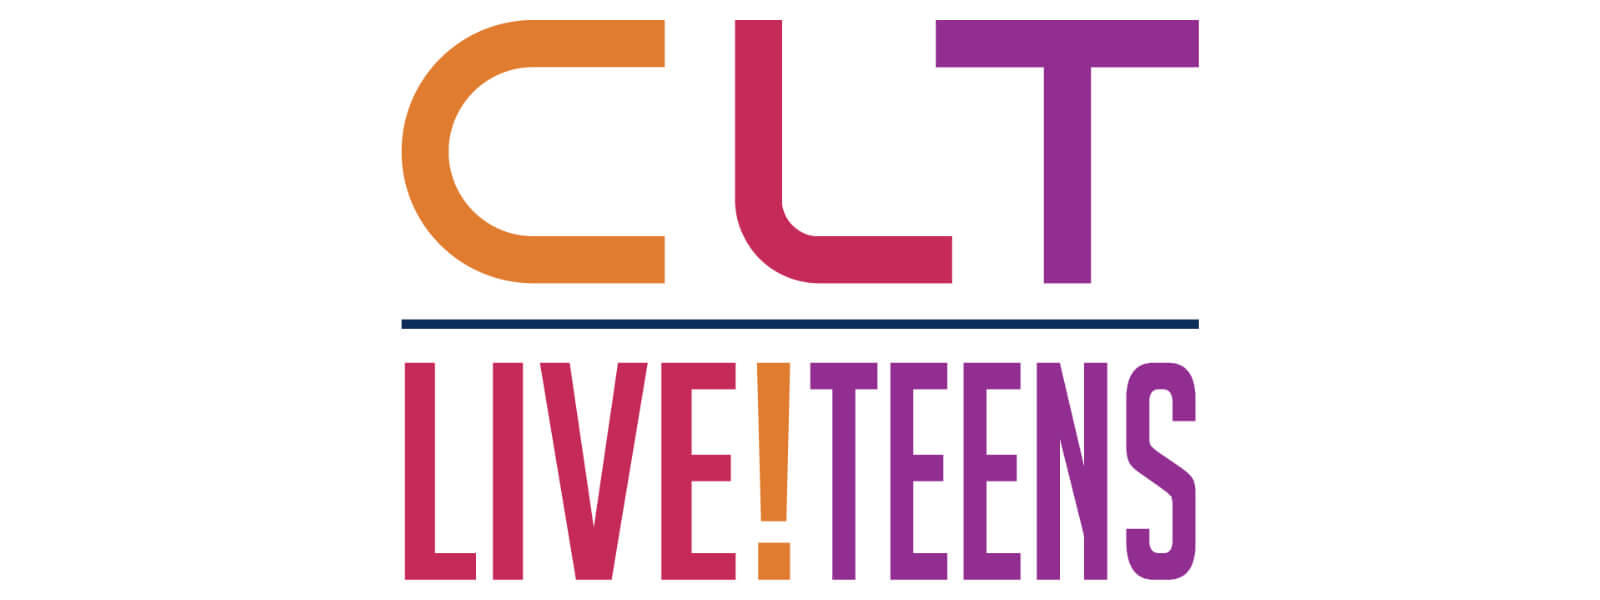 Charlotte-Live-Teens_1600x600.jpg